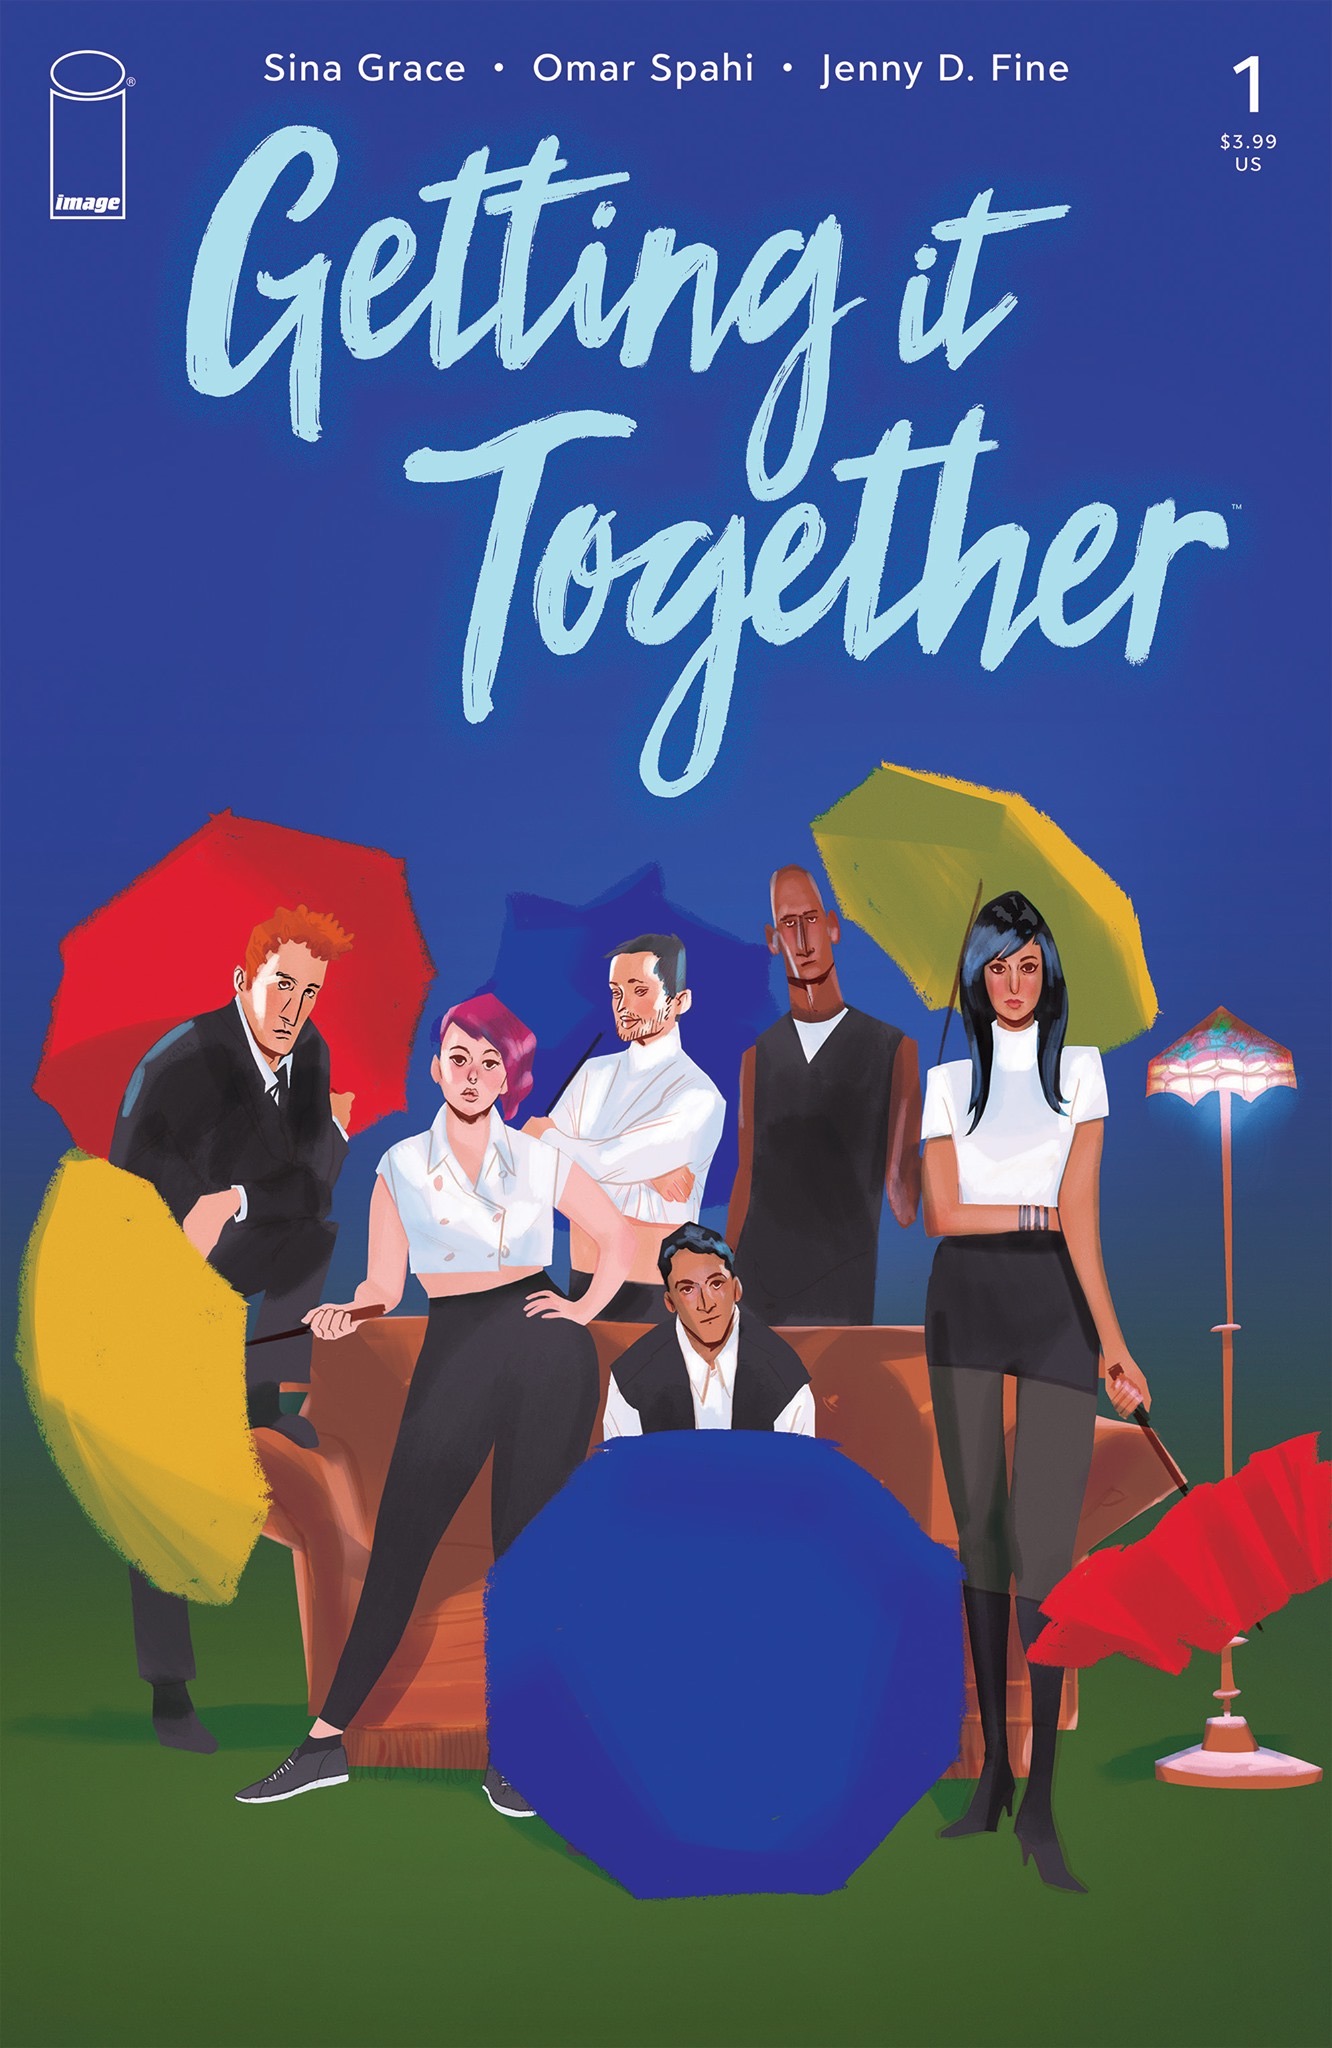 poster - Sina Grace Omar Spahi Jenny D. Fine Getting it "Together